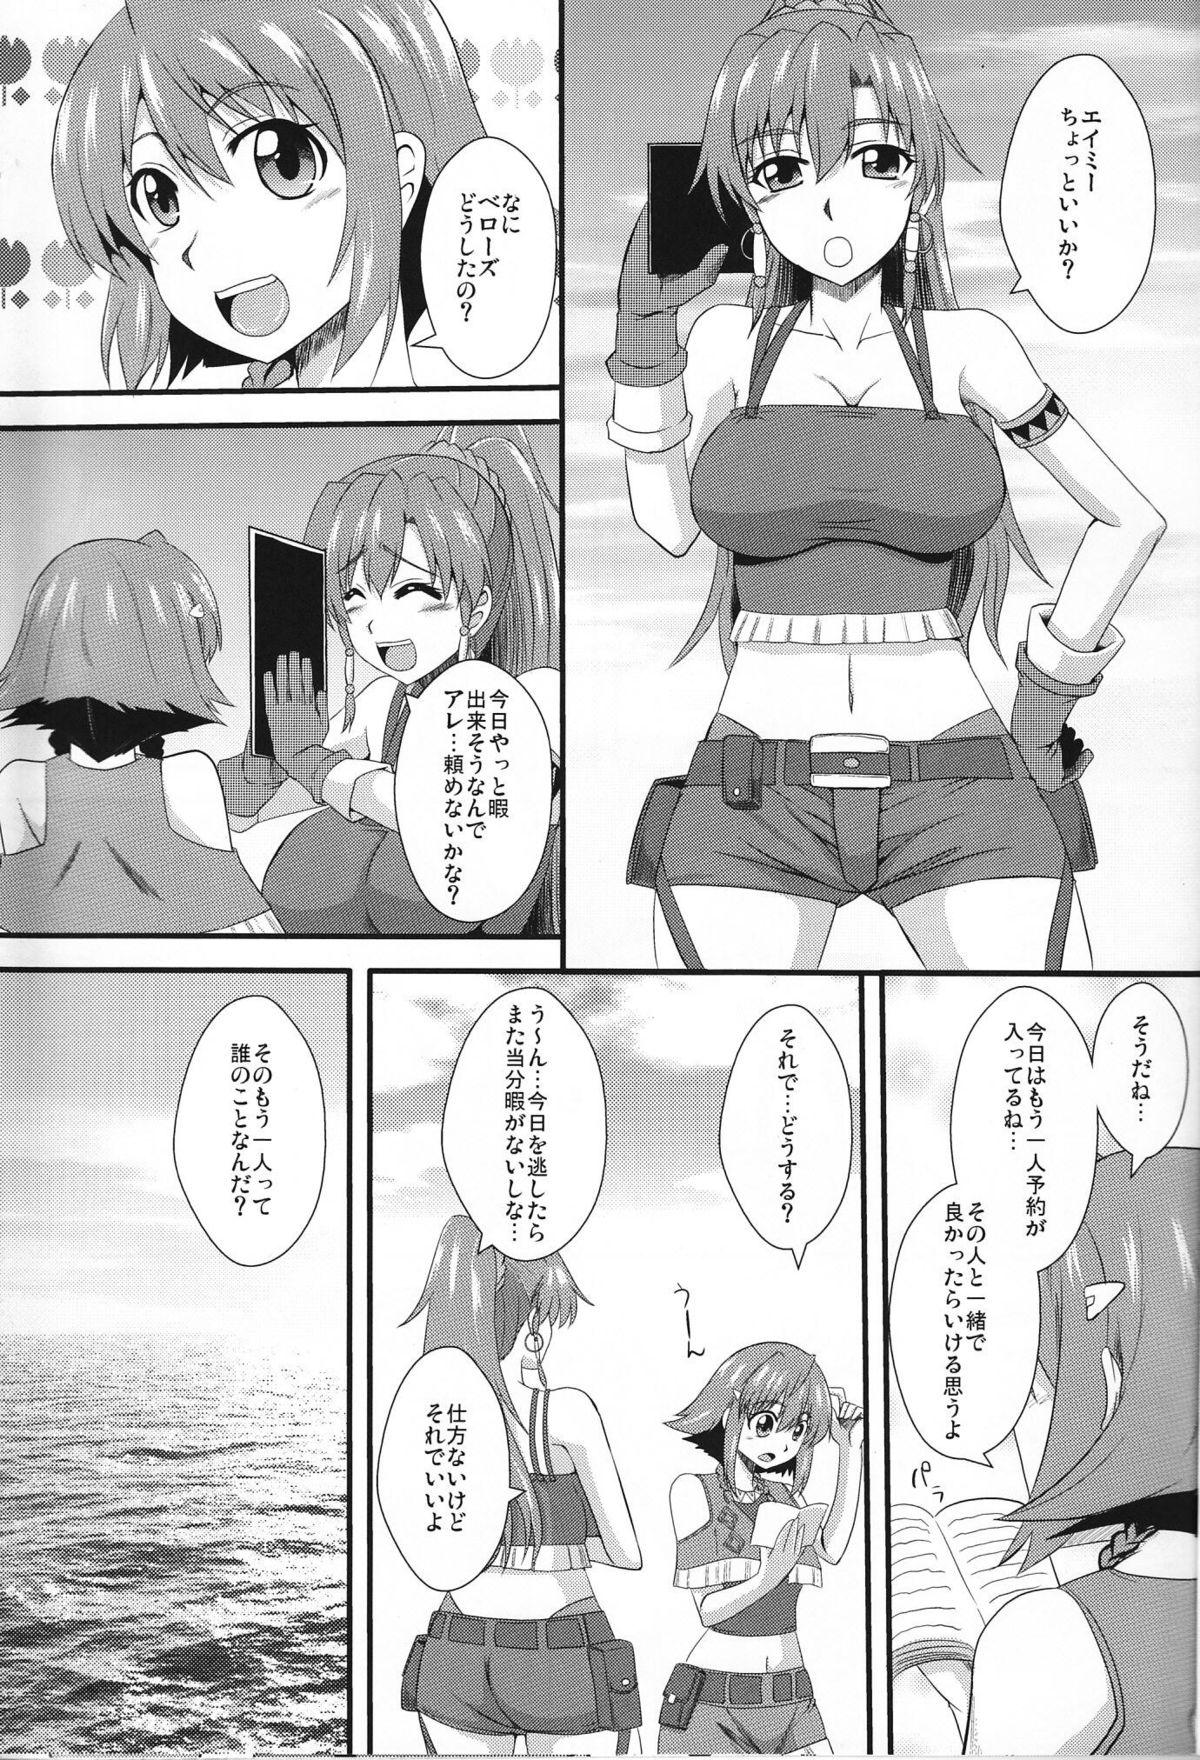 Butts Shoukan no Gargantia - Suisei no gargantia Jocks - Page 2